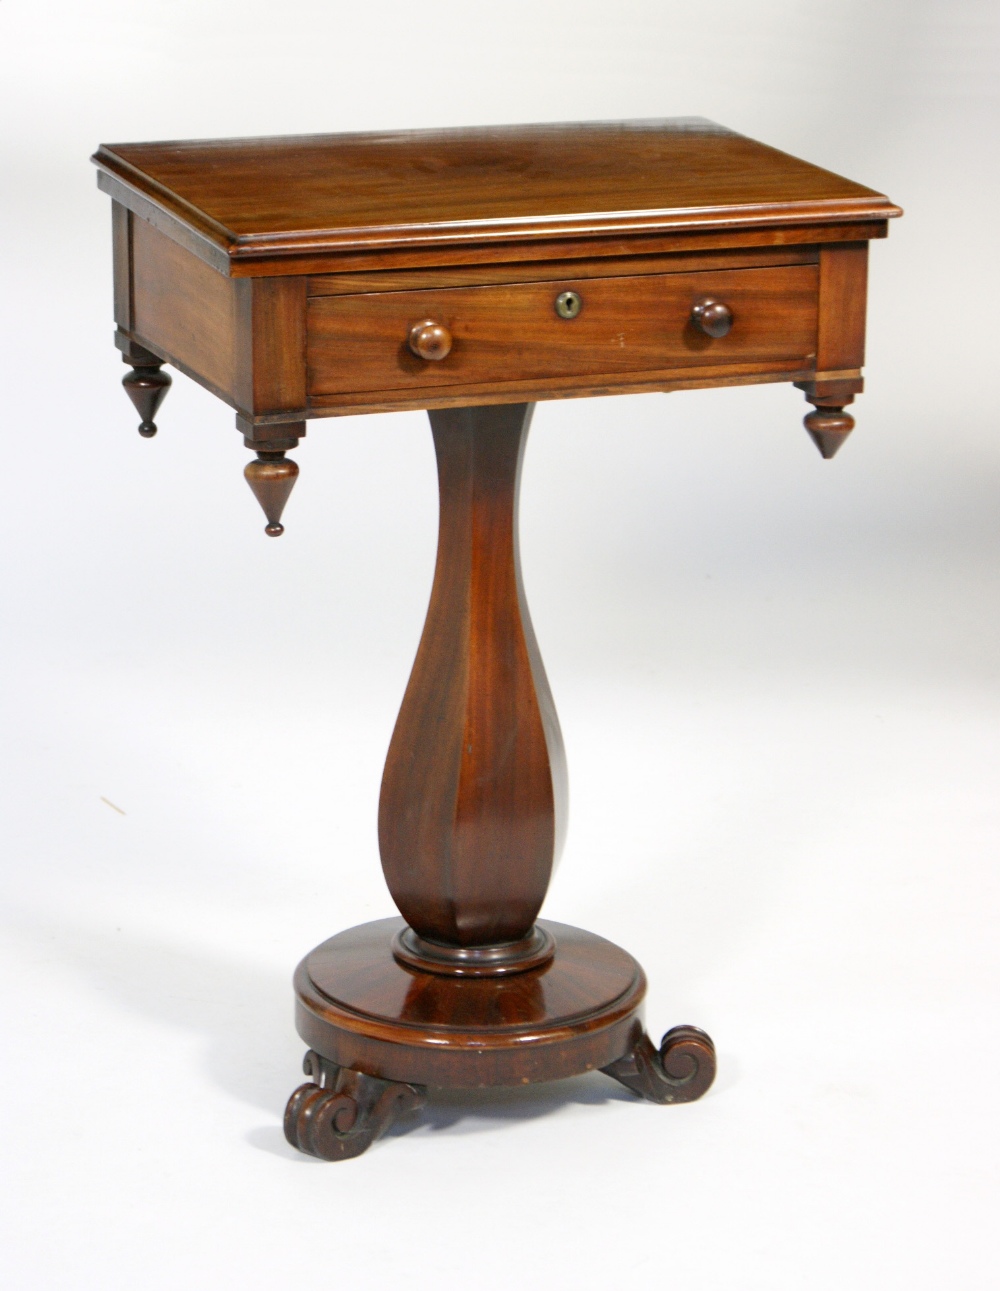 Victorian mahogany pedestal work table, circa 1860, having a swivel folding top over a single